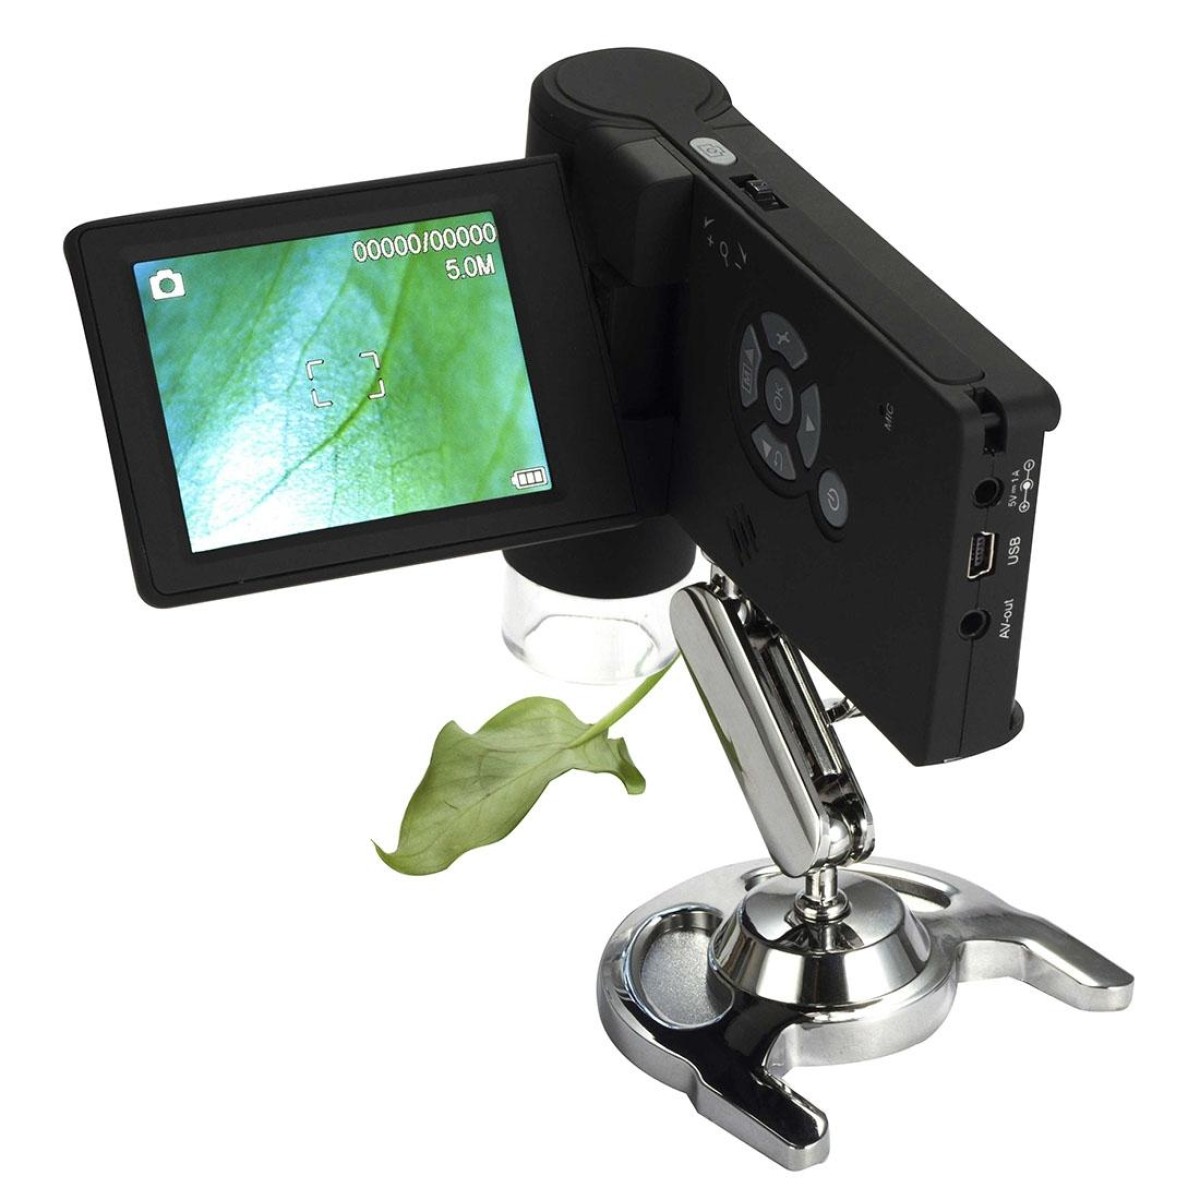 UM039 300X 5 Mega Pixels 3 inch LCD Handhold Digital Microscope with 8 LEDs